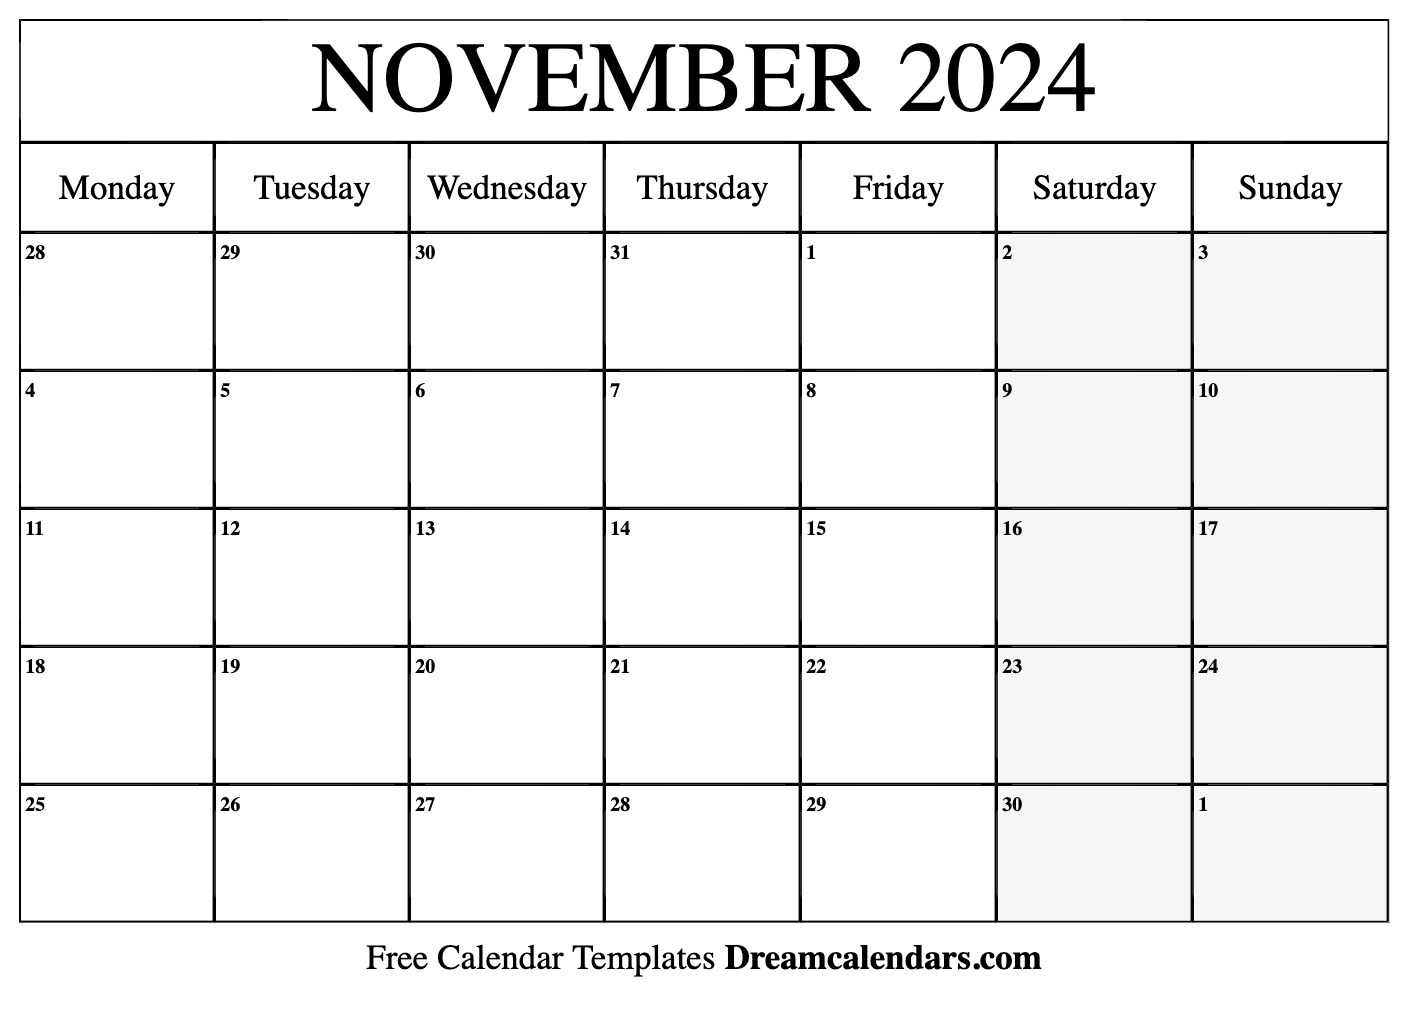 November 2024 Calendar | Free Blank Printable With Holidays | Nov 2024 Calendar Printable Free